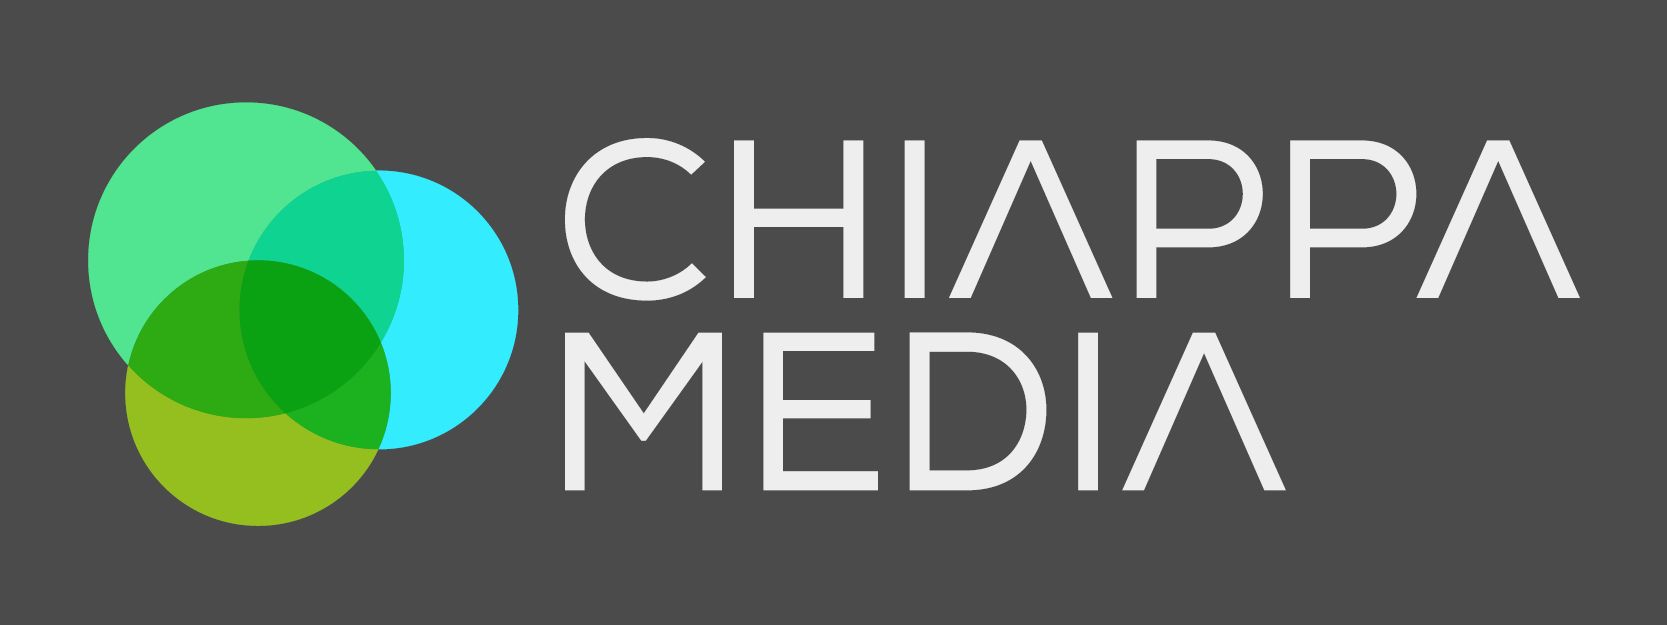 Chiappa Media Logo dunkel